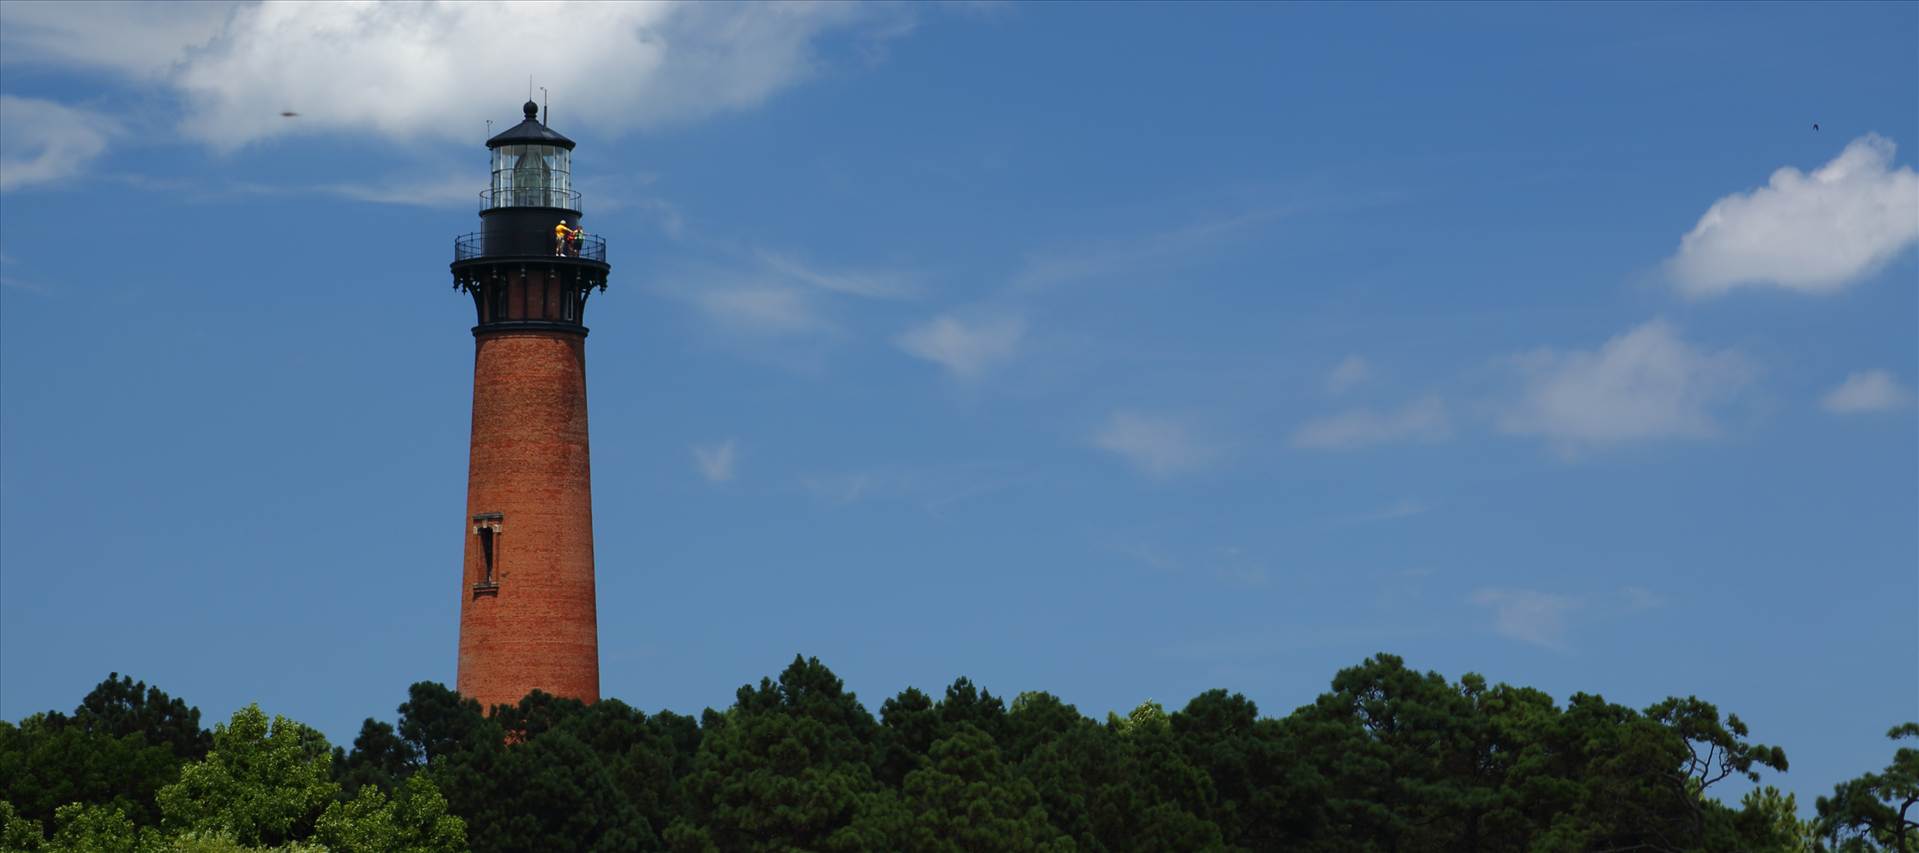 Currituck Lighthouse From Afar - Currituck, North Carolina Lighthouse by Scott Smith Photos